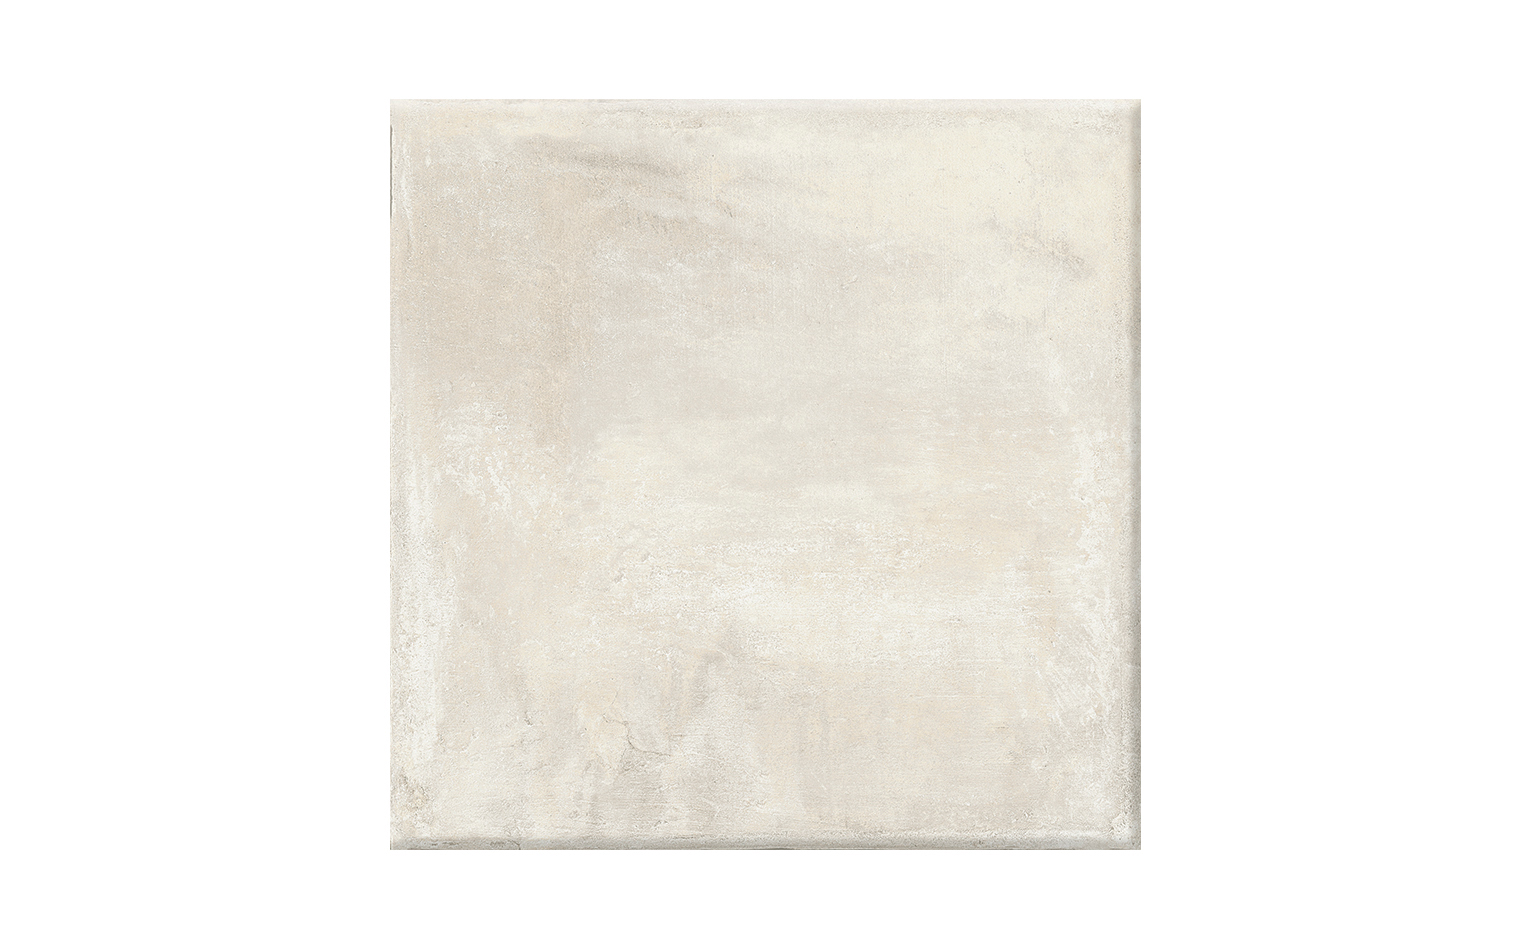 Carrelage NATURE GRIP, aspect pierre blanc, dim 50.00 x 50.00 cm